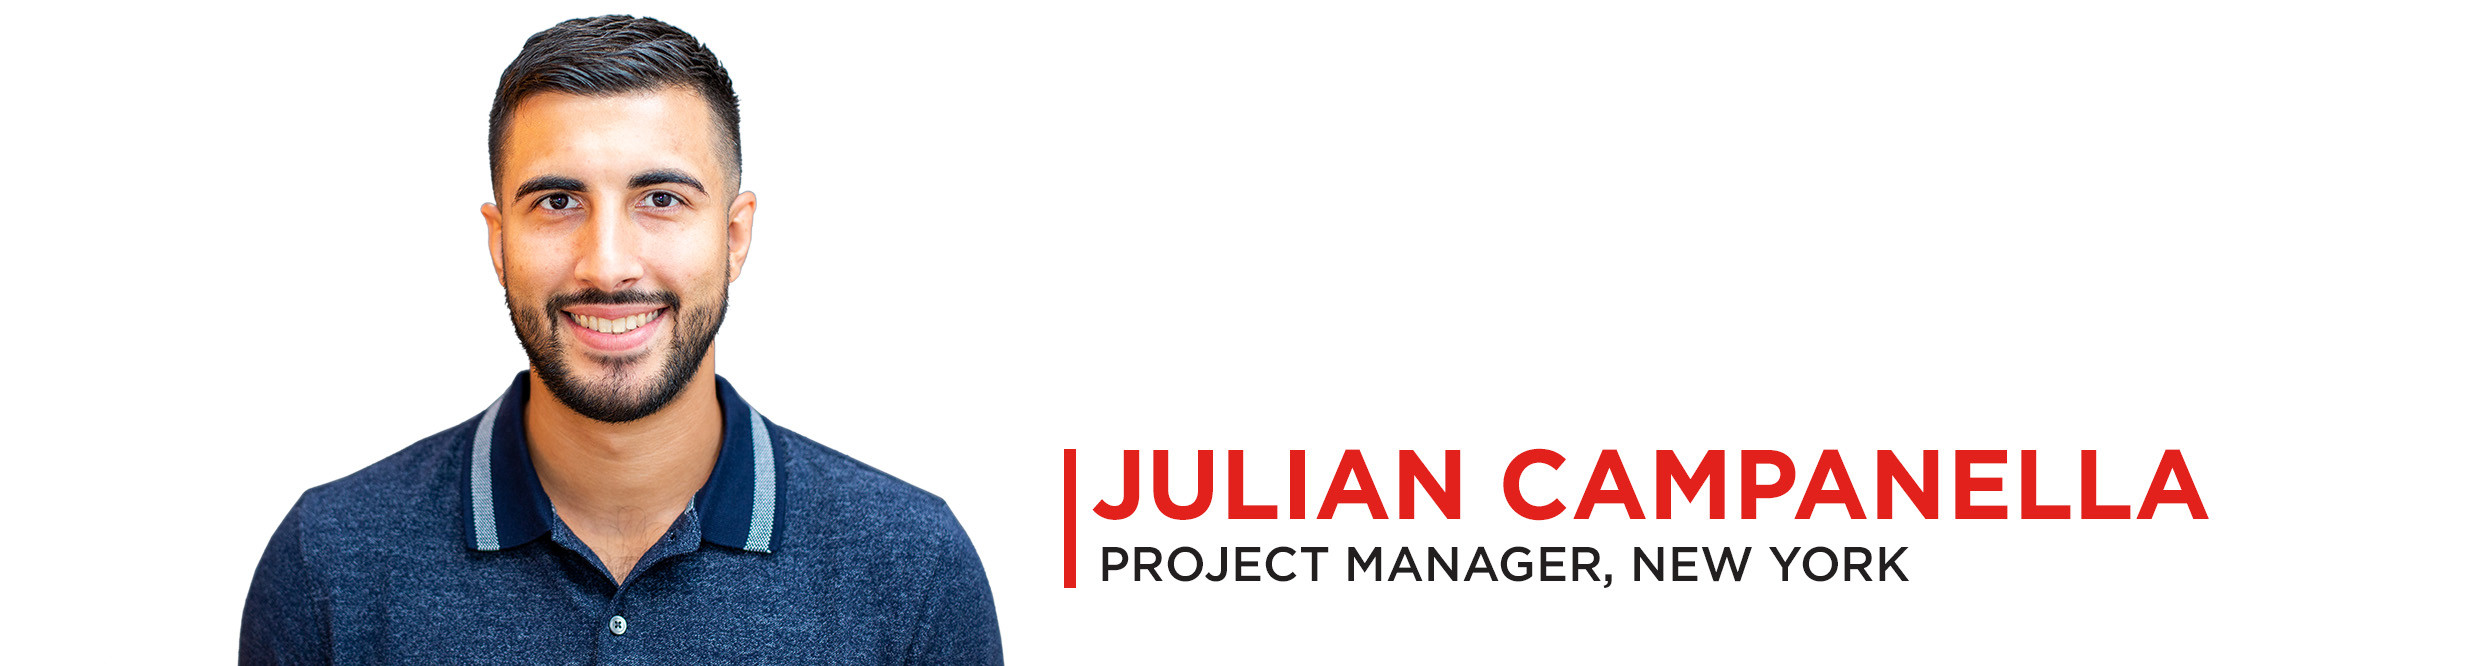 Julian Campanella - Project Manager, New York